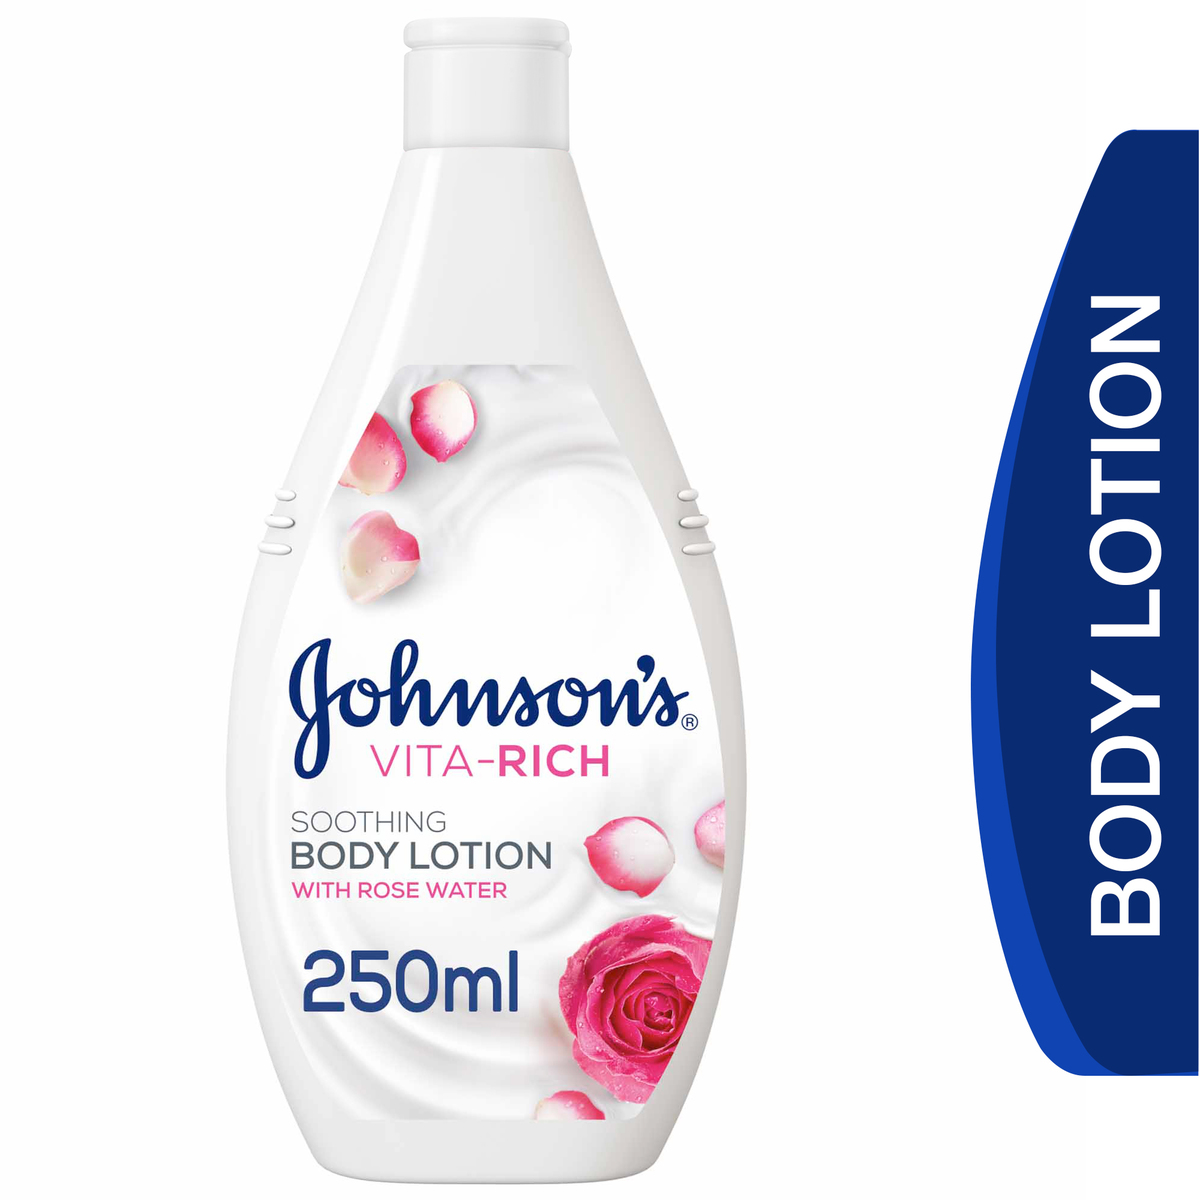 Johnson's Body Lotion Vita-Rich Soothing 250 ml